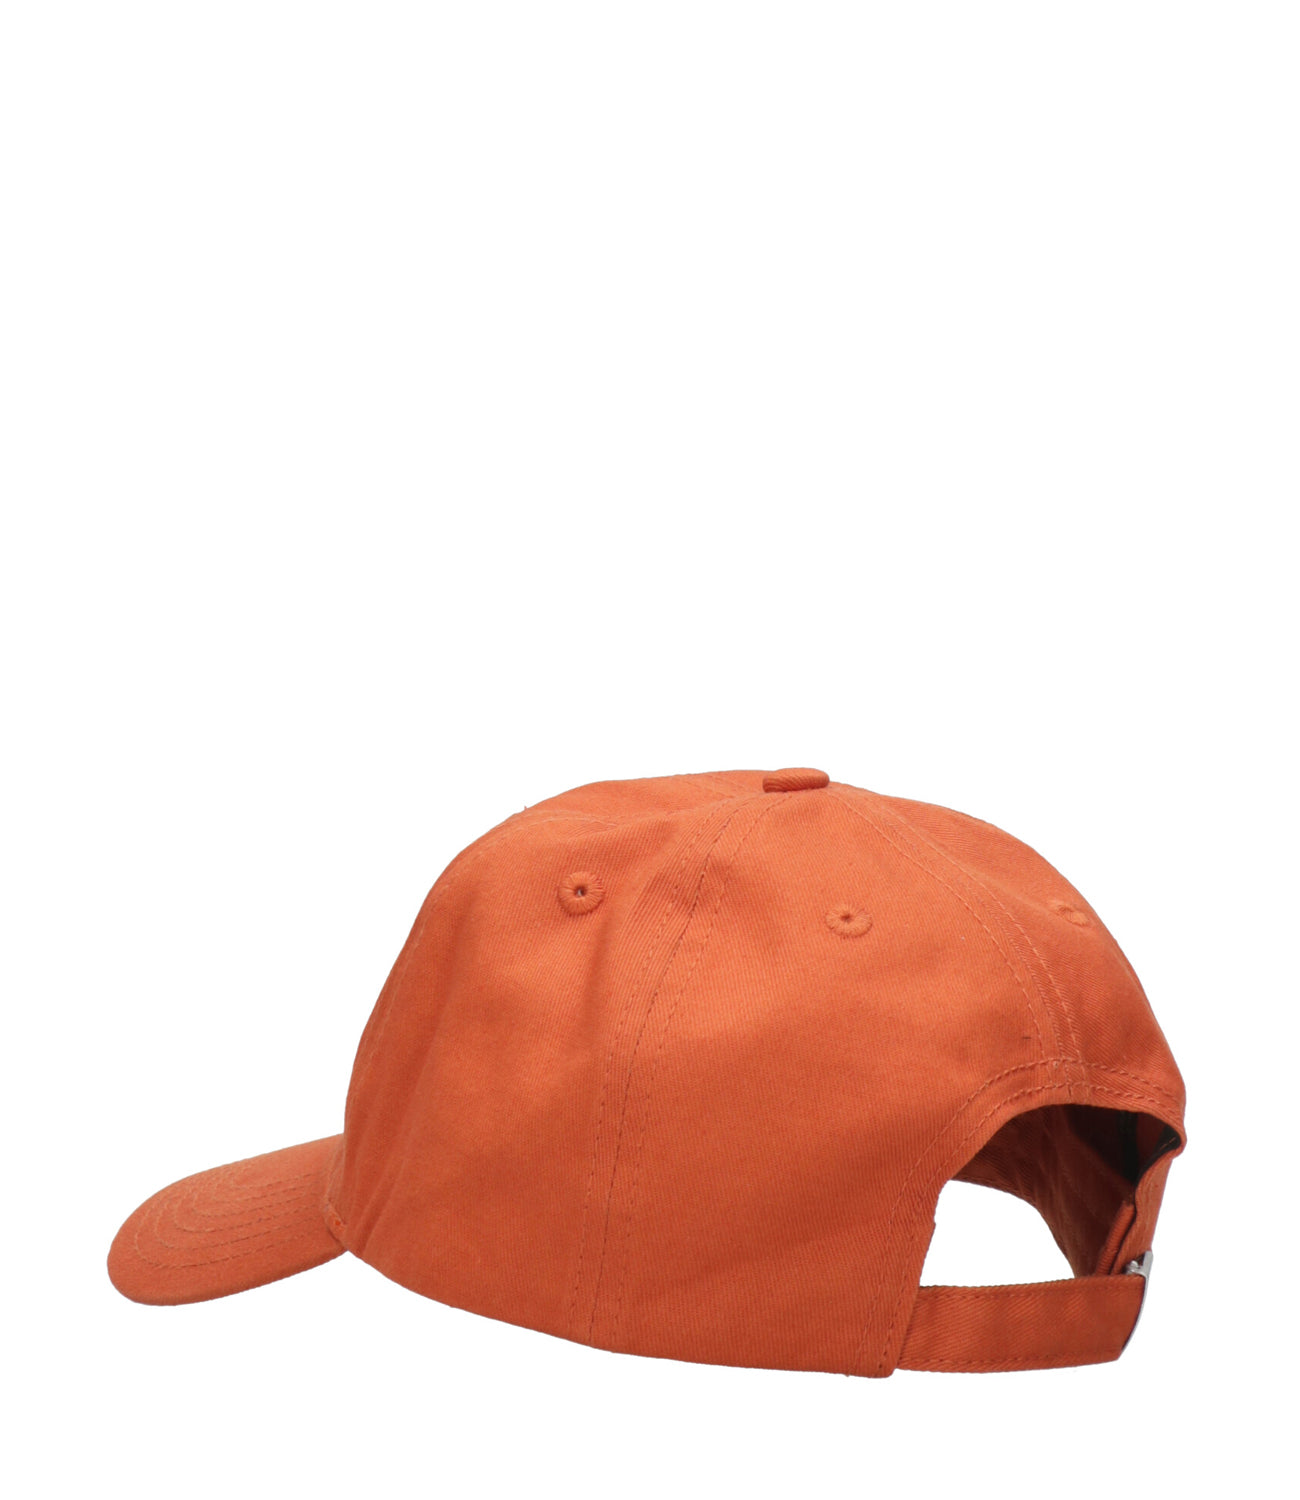 Marcelo Burlon | Cross Baseball Hat Orange and Black